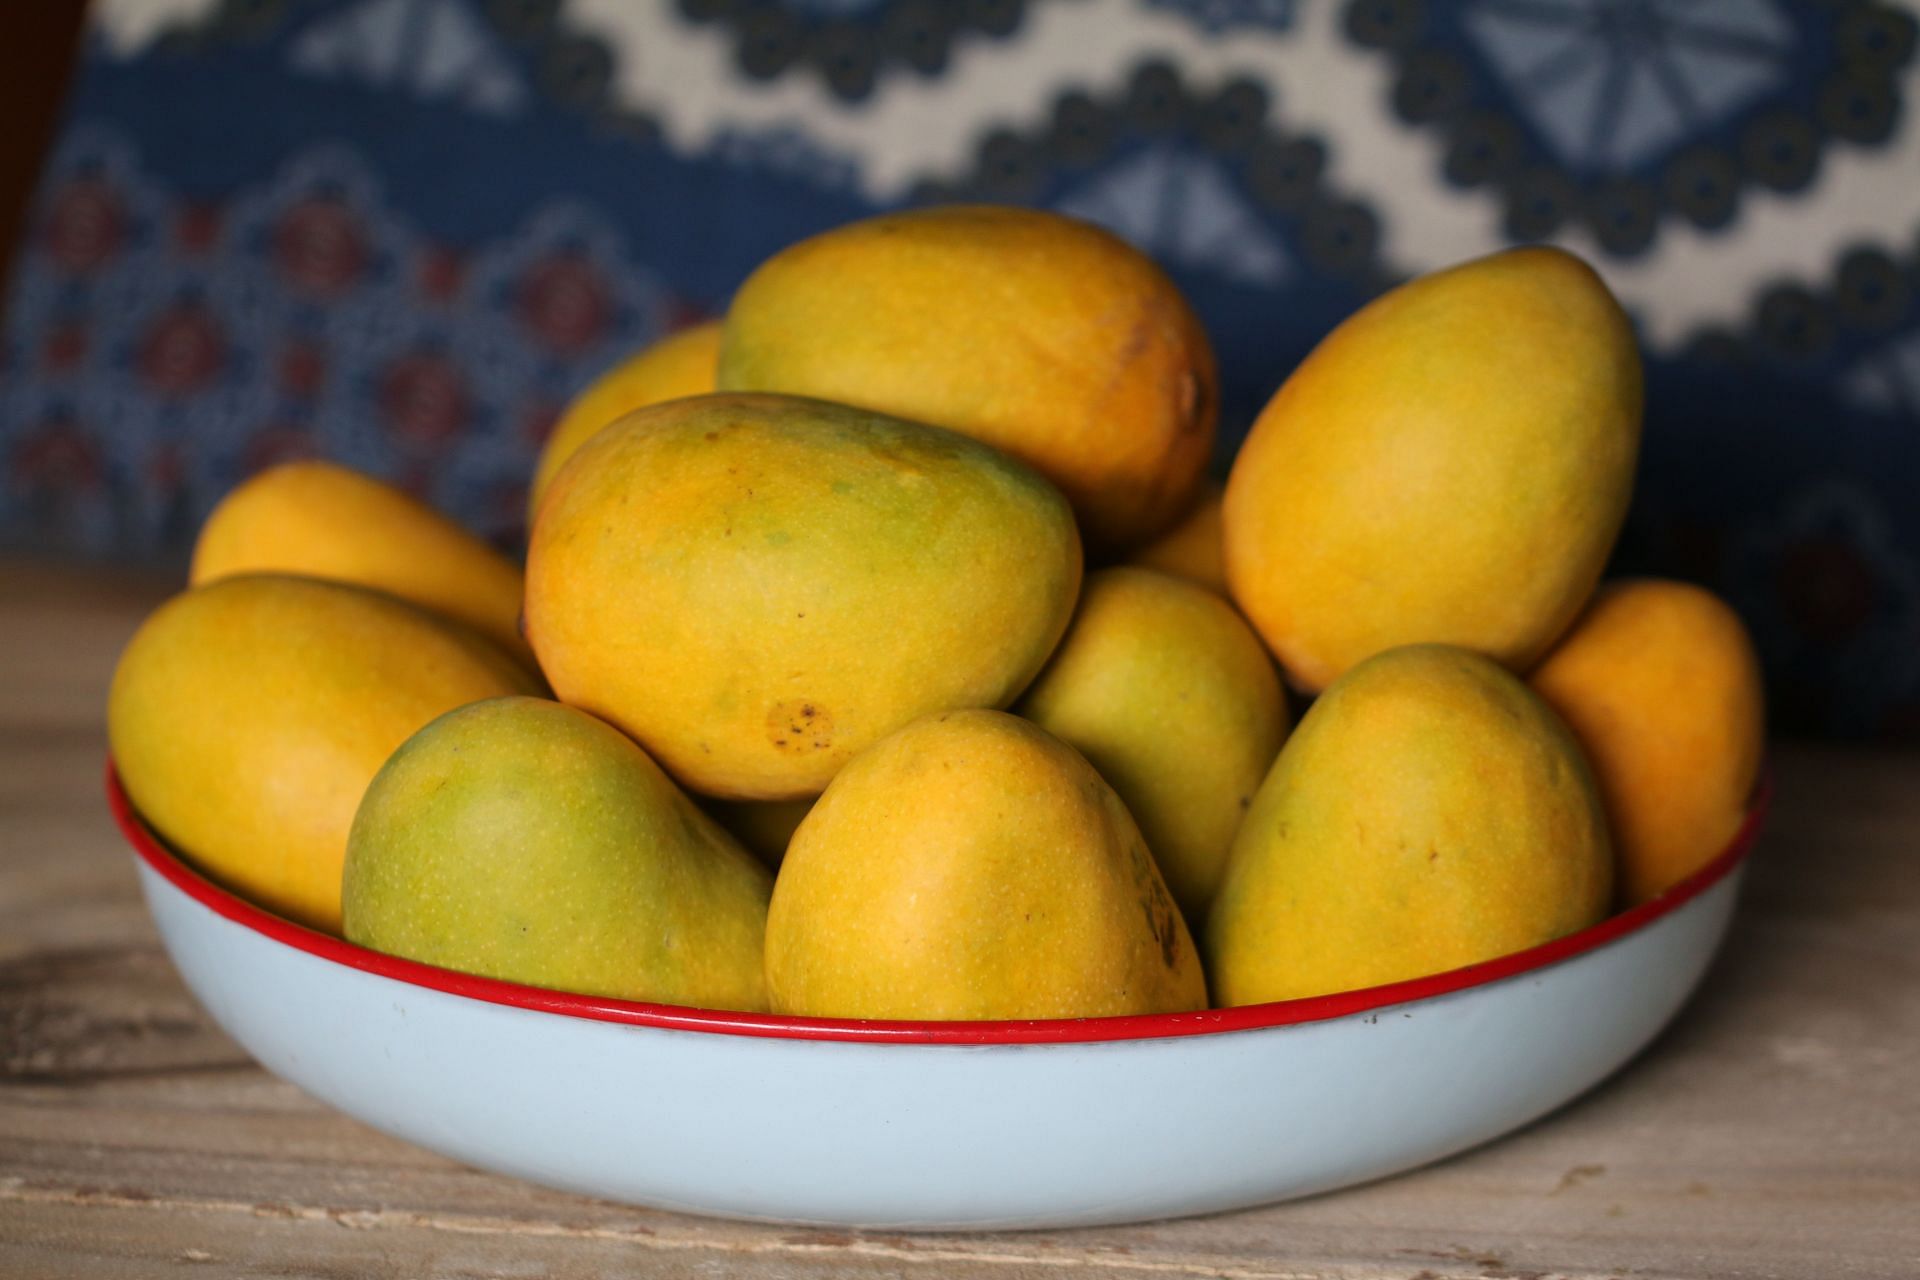 You can eat mango skin without worries (Image via Unsplash/HOTCHICKSING)